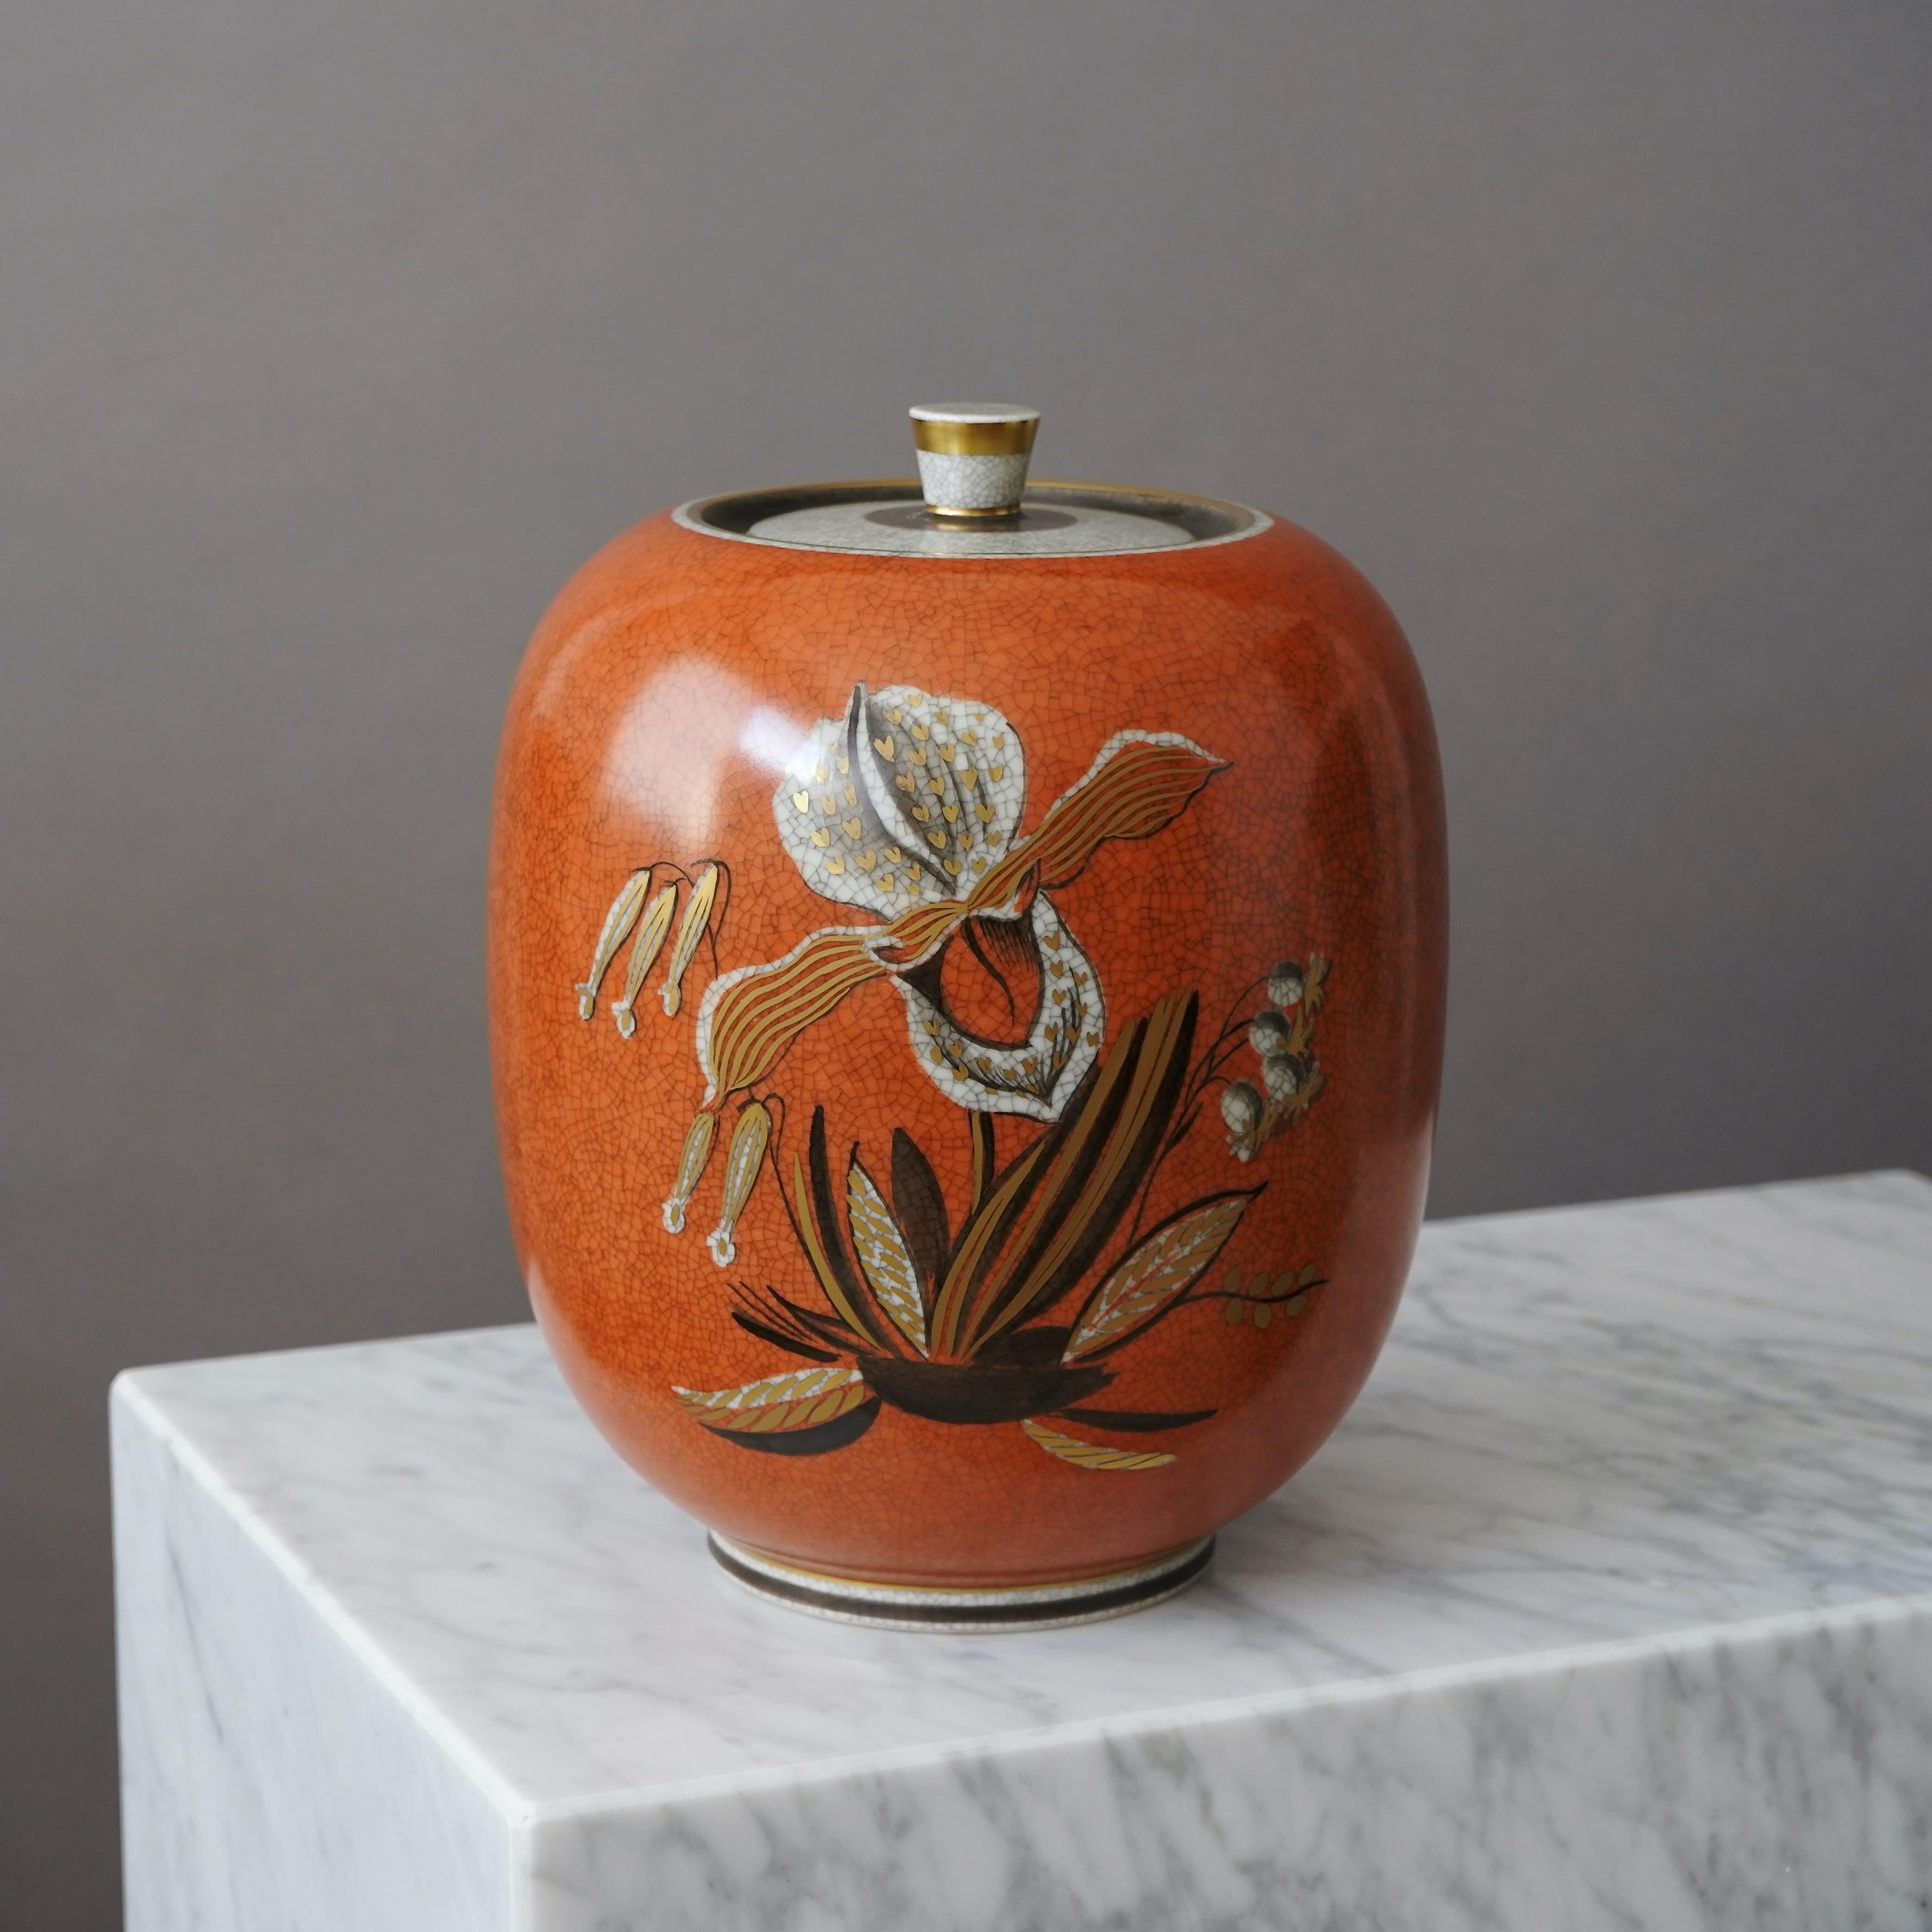 Elegant Royal Copenhagen crackle glazed lidded urn with painted flowers and gilded banding on rim and lidd.
Designed by THORKILD OLSEN (1890-1973) for ROYAL COPENHAGEN. Made in Denmark, 1967.

Excellent condition. Makers marks on base of vase.